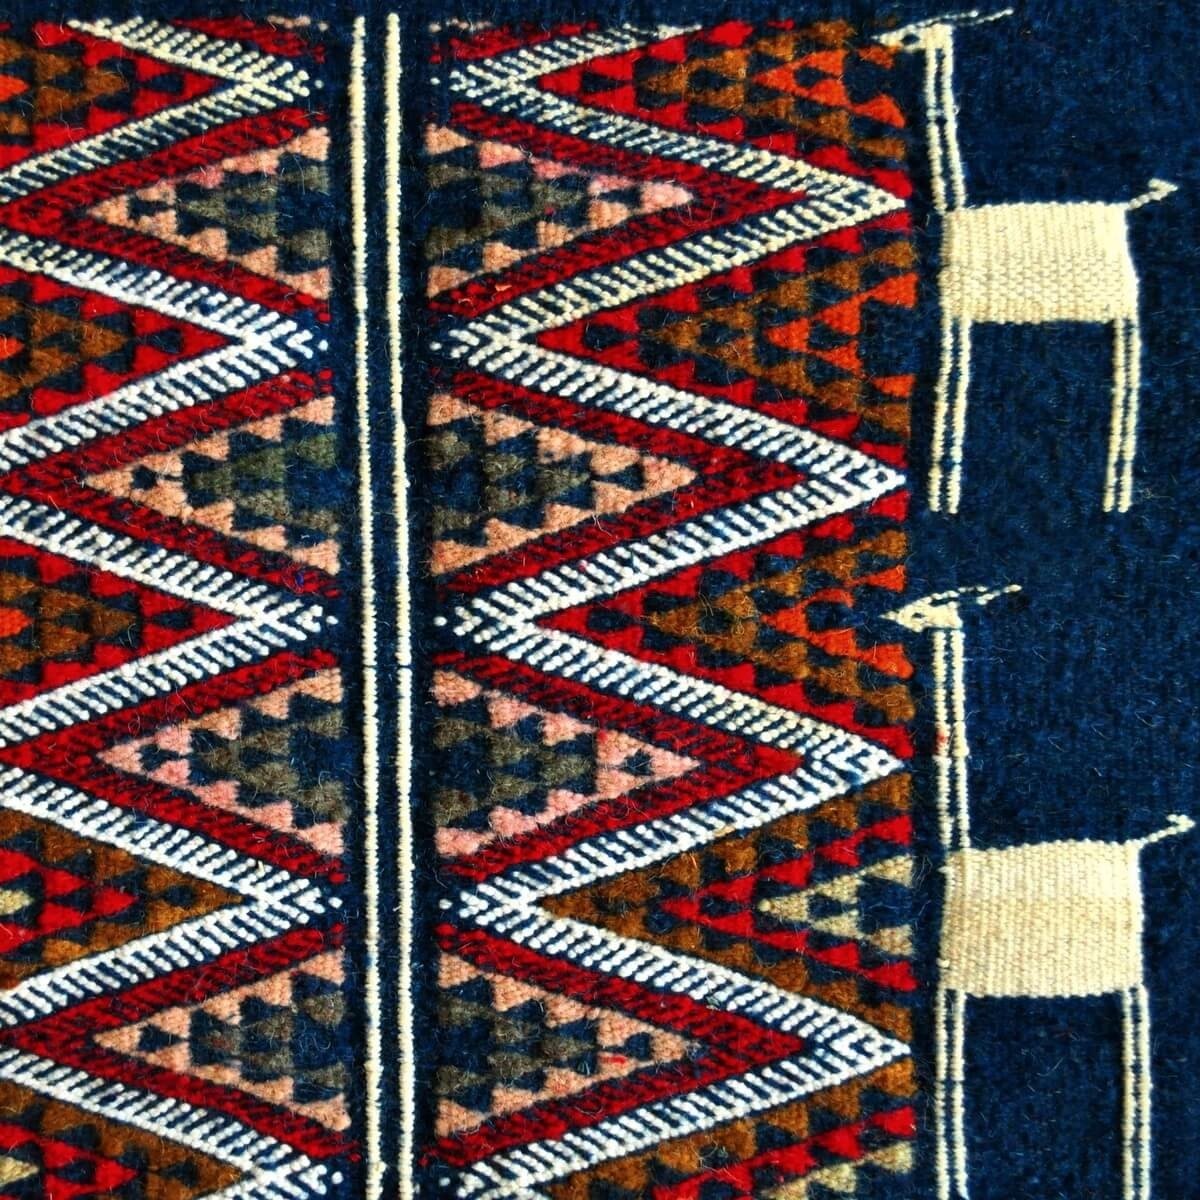 Berber tapijt Tapijt Kilim Ichbilia 60x115 Blauw/Wit/Rood (Handgeweven, Wol, Tunesië) Tunesisch kilimdeken, Marokkaanse stijl. R